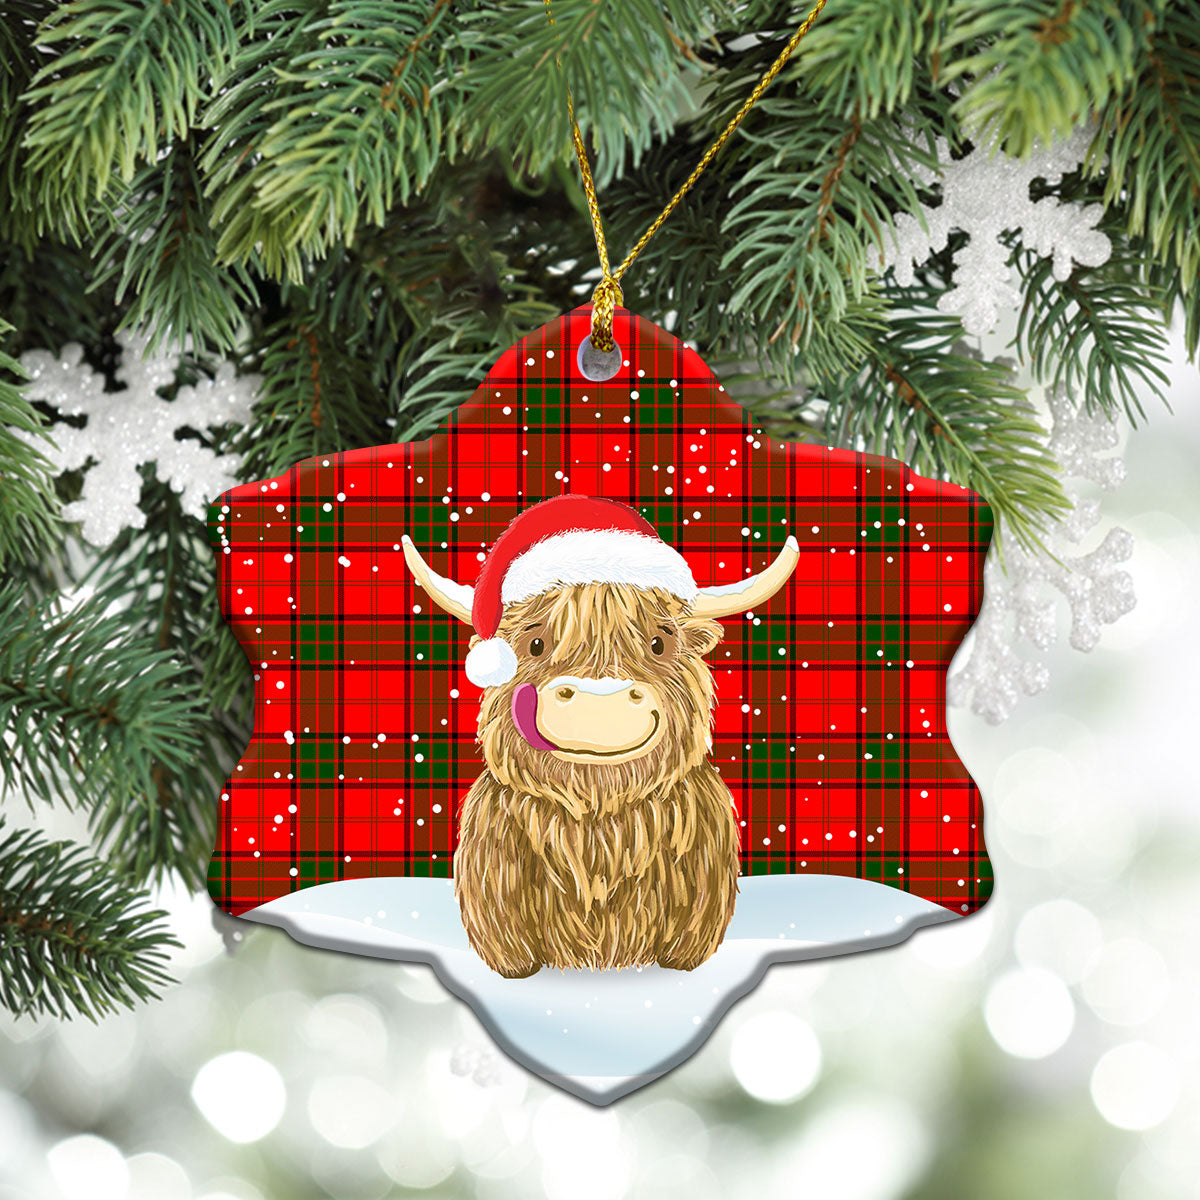 Maxtone Tartan Christmas Ceramic Ornament - Highland Cows Style